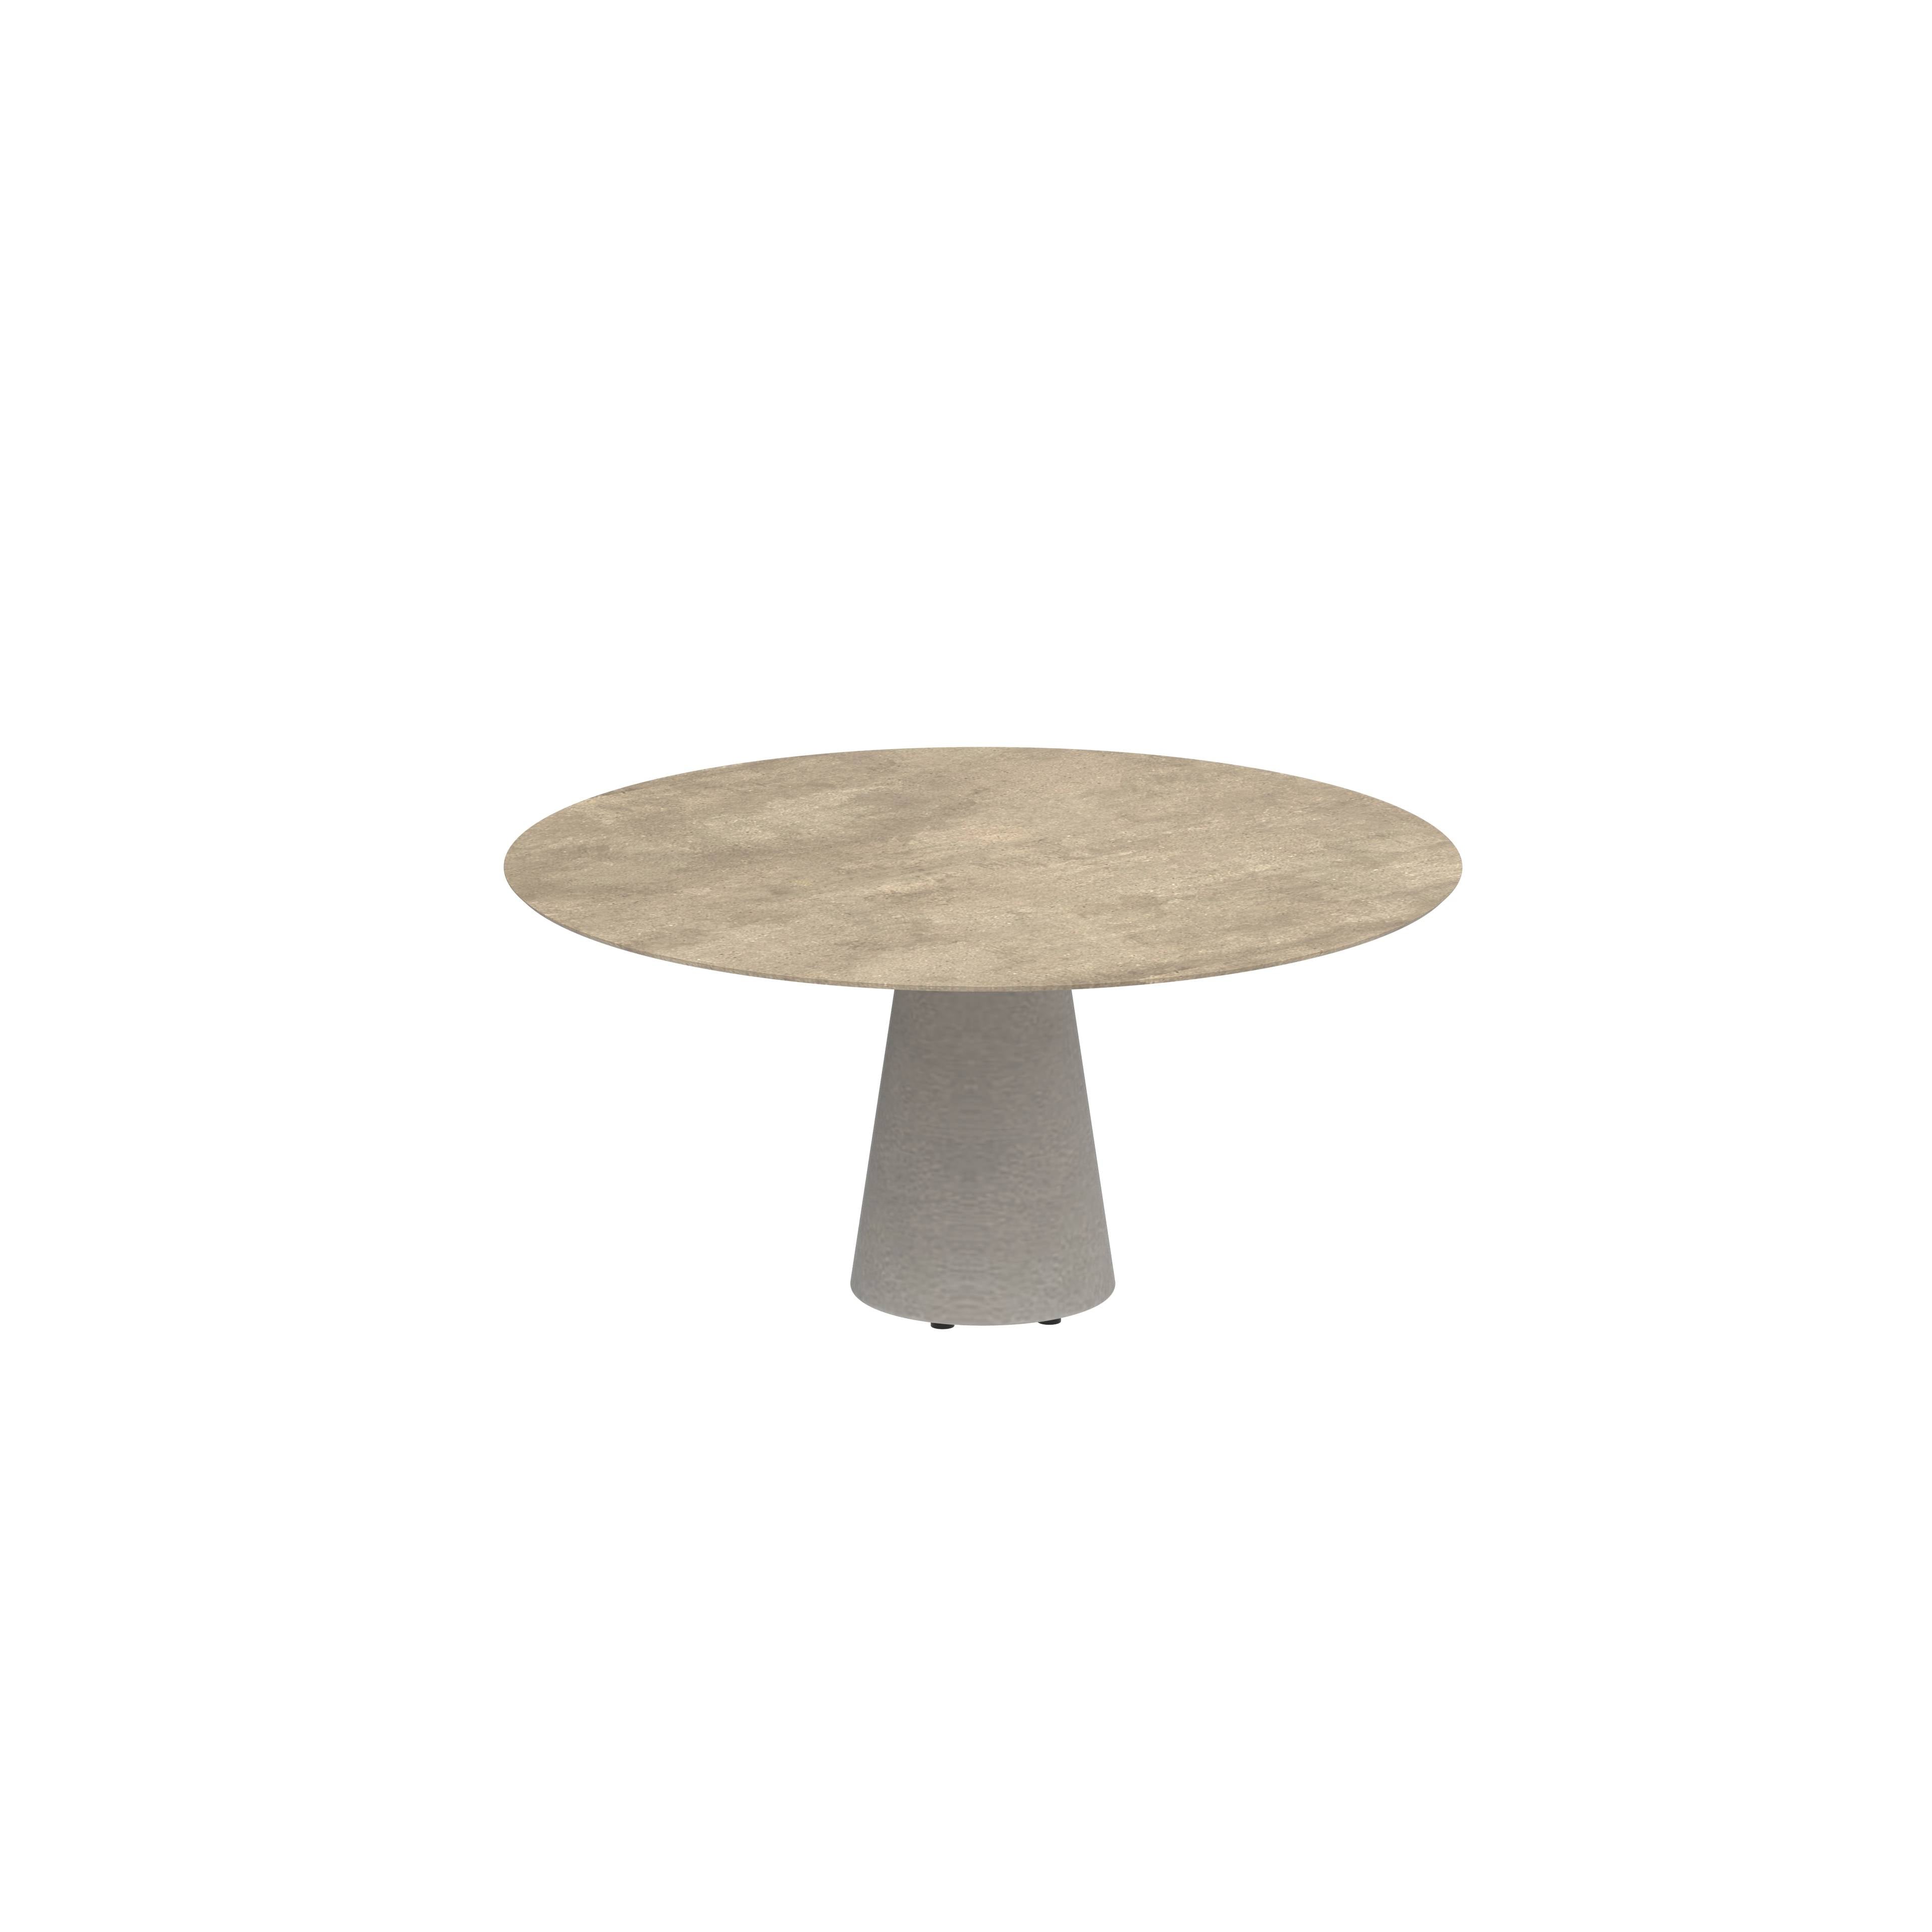 Conix Table Round Ø 160cm Legs Concrete Cement Grey - Tabletop Ceramic Terra Sabbia